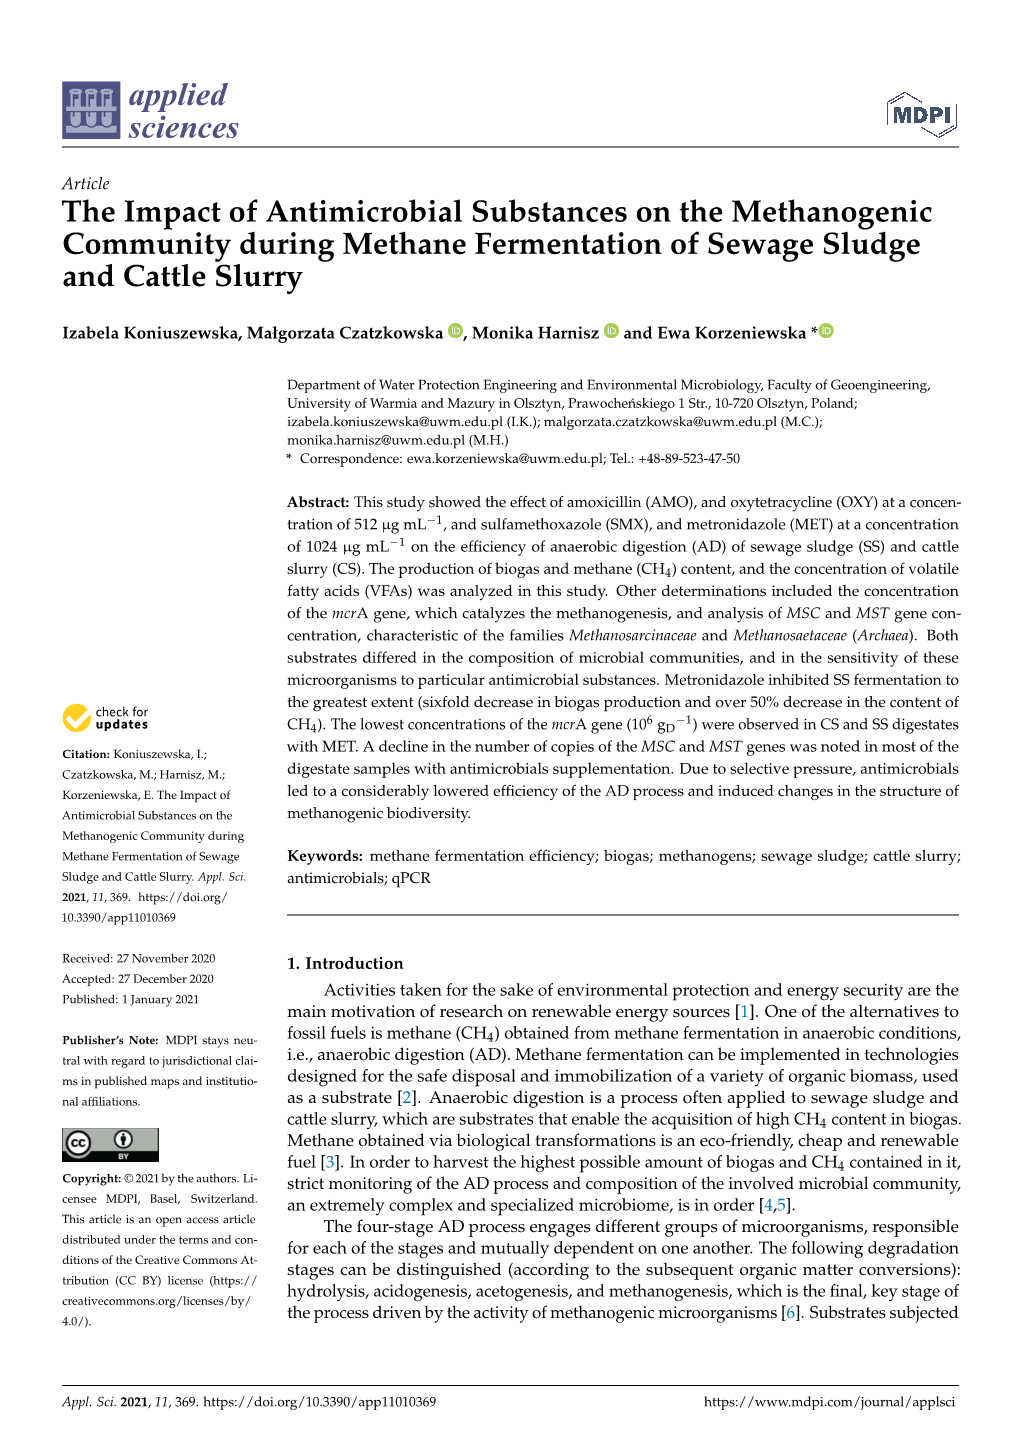 The Impact of Antimicrobial Substances on the Methanogenic Community During Methane Fermentation of Sewage Sludge and Cattle Slurry